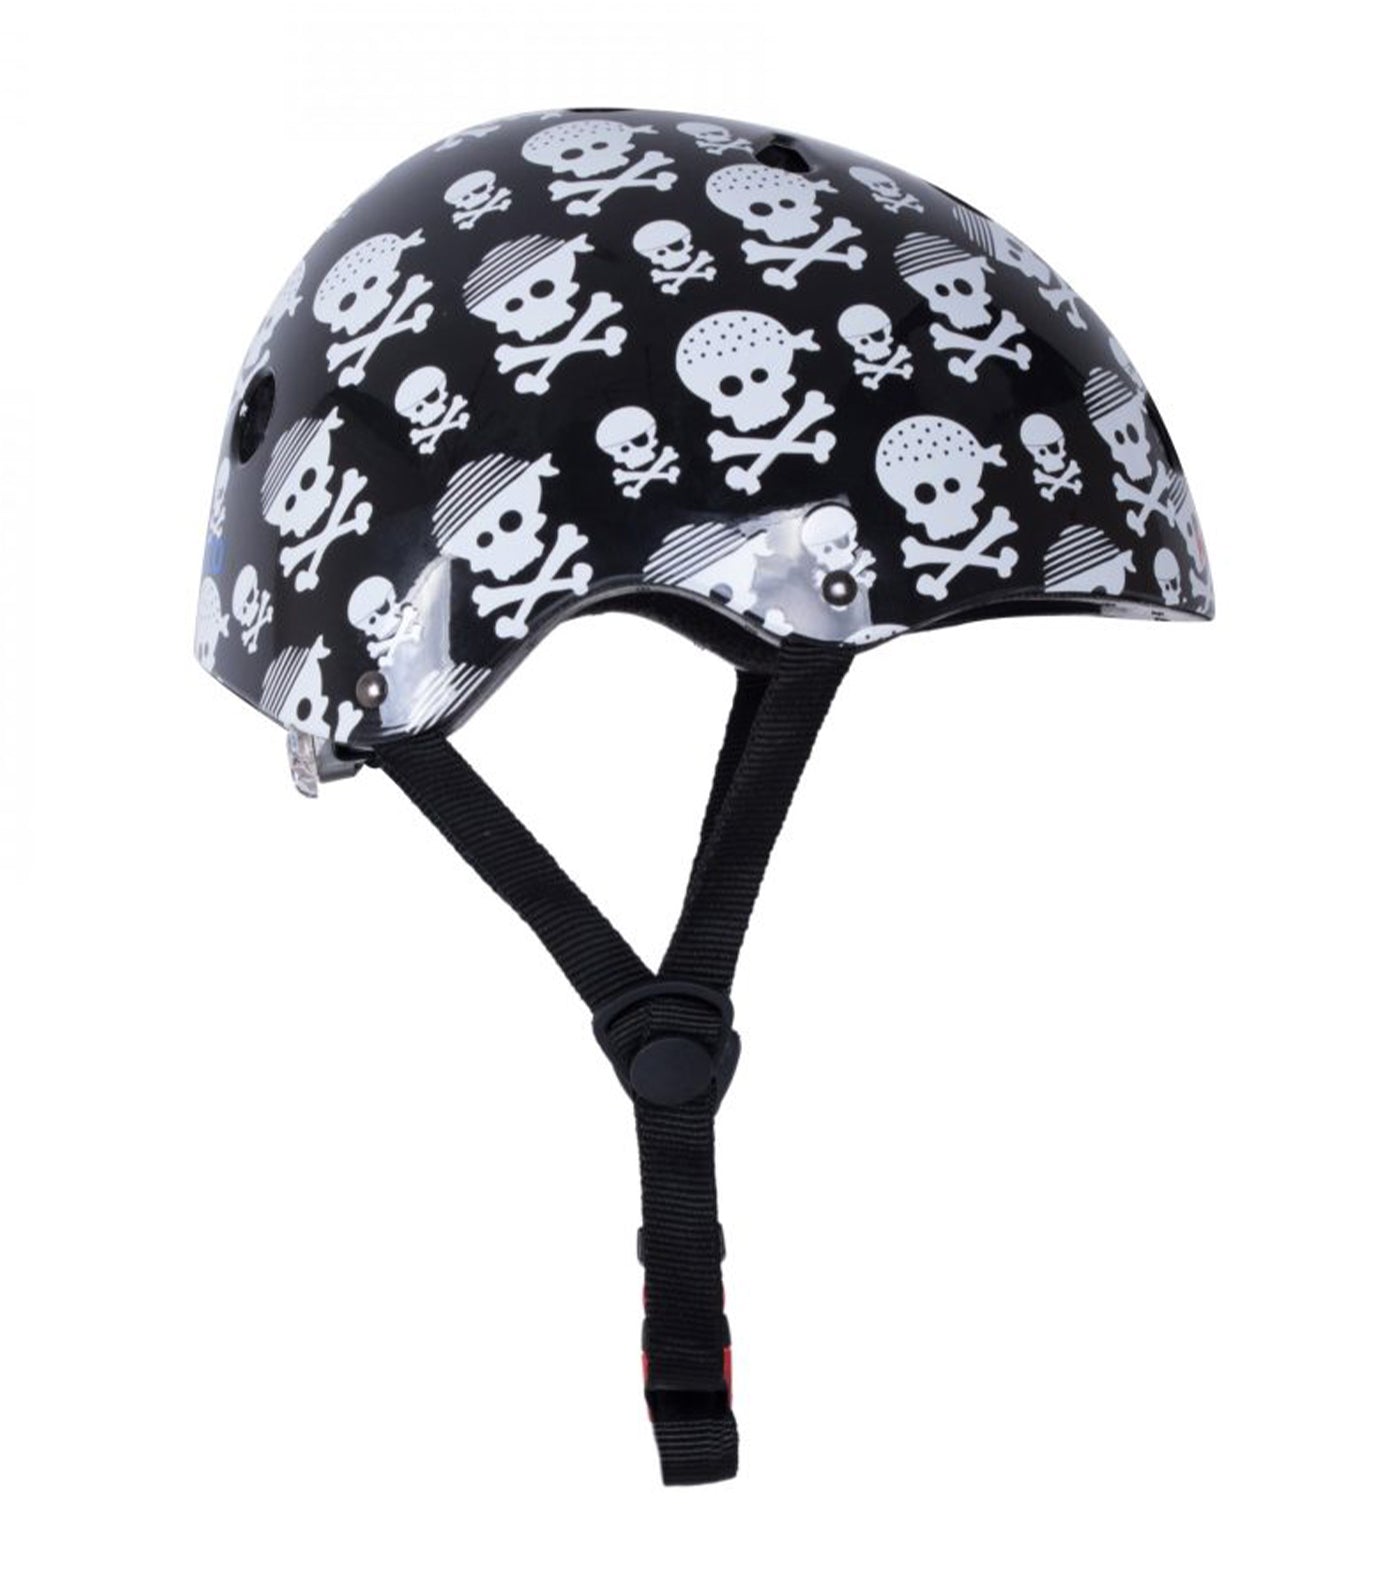 Kids Cycling Helmet - Skullz